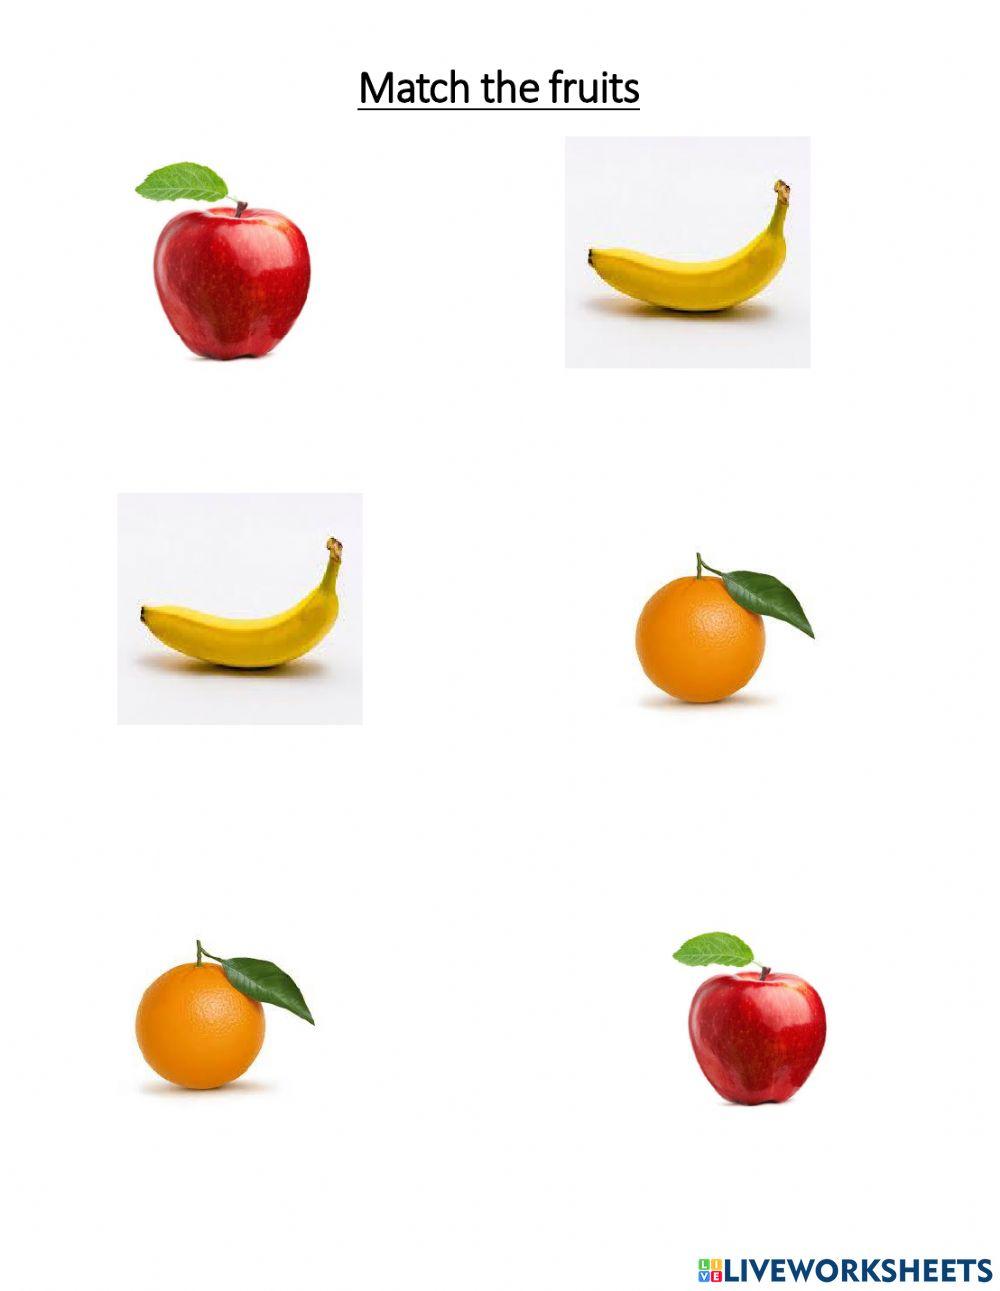 Matching fruits